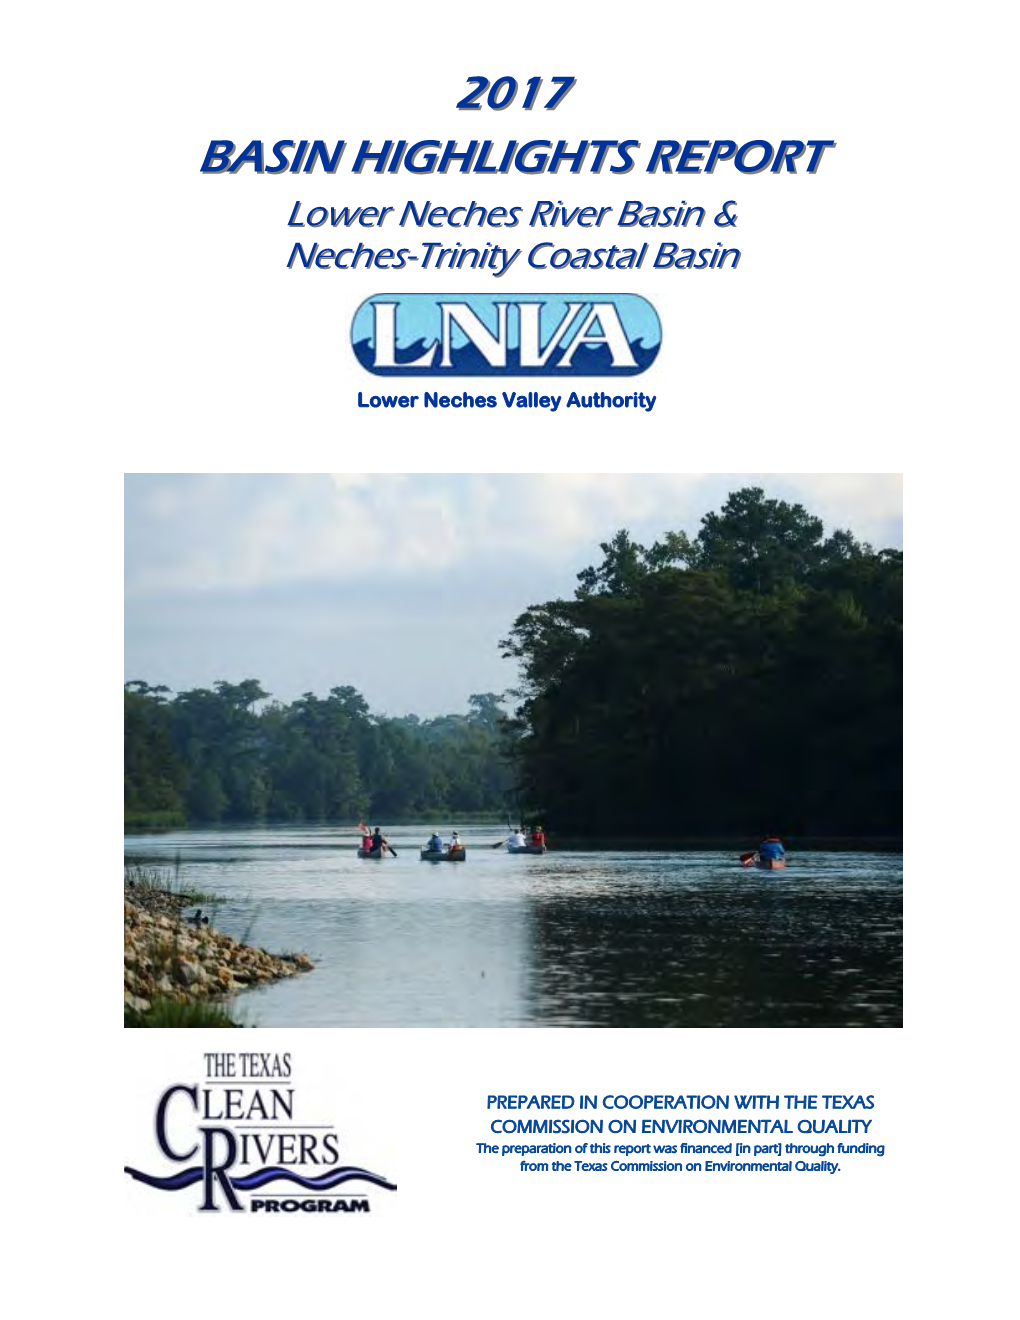 2017 Basin Highlights Report